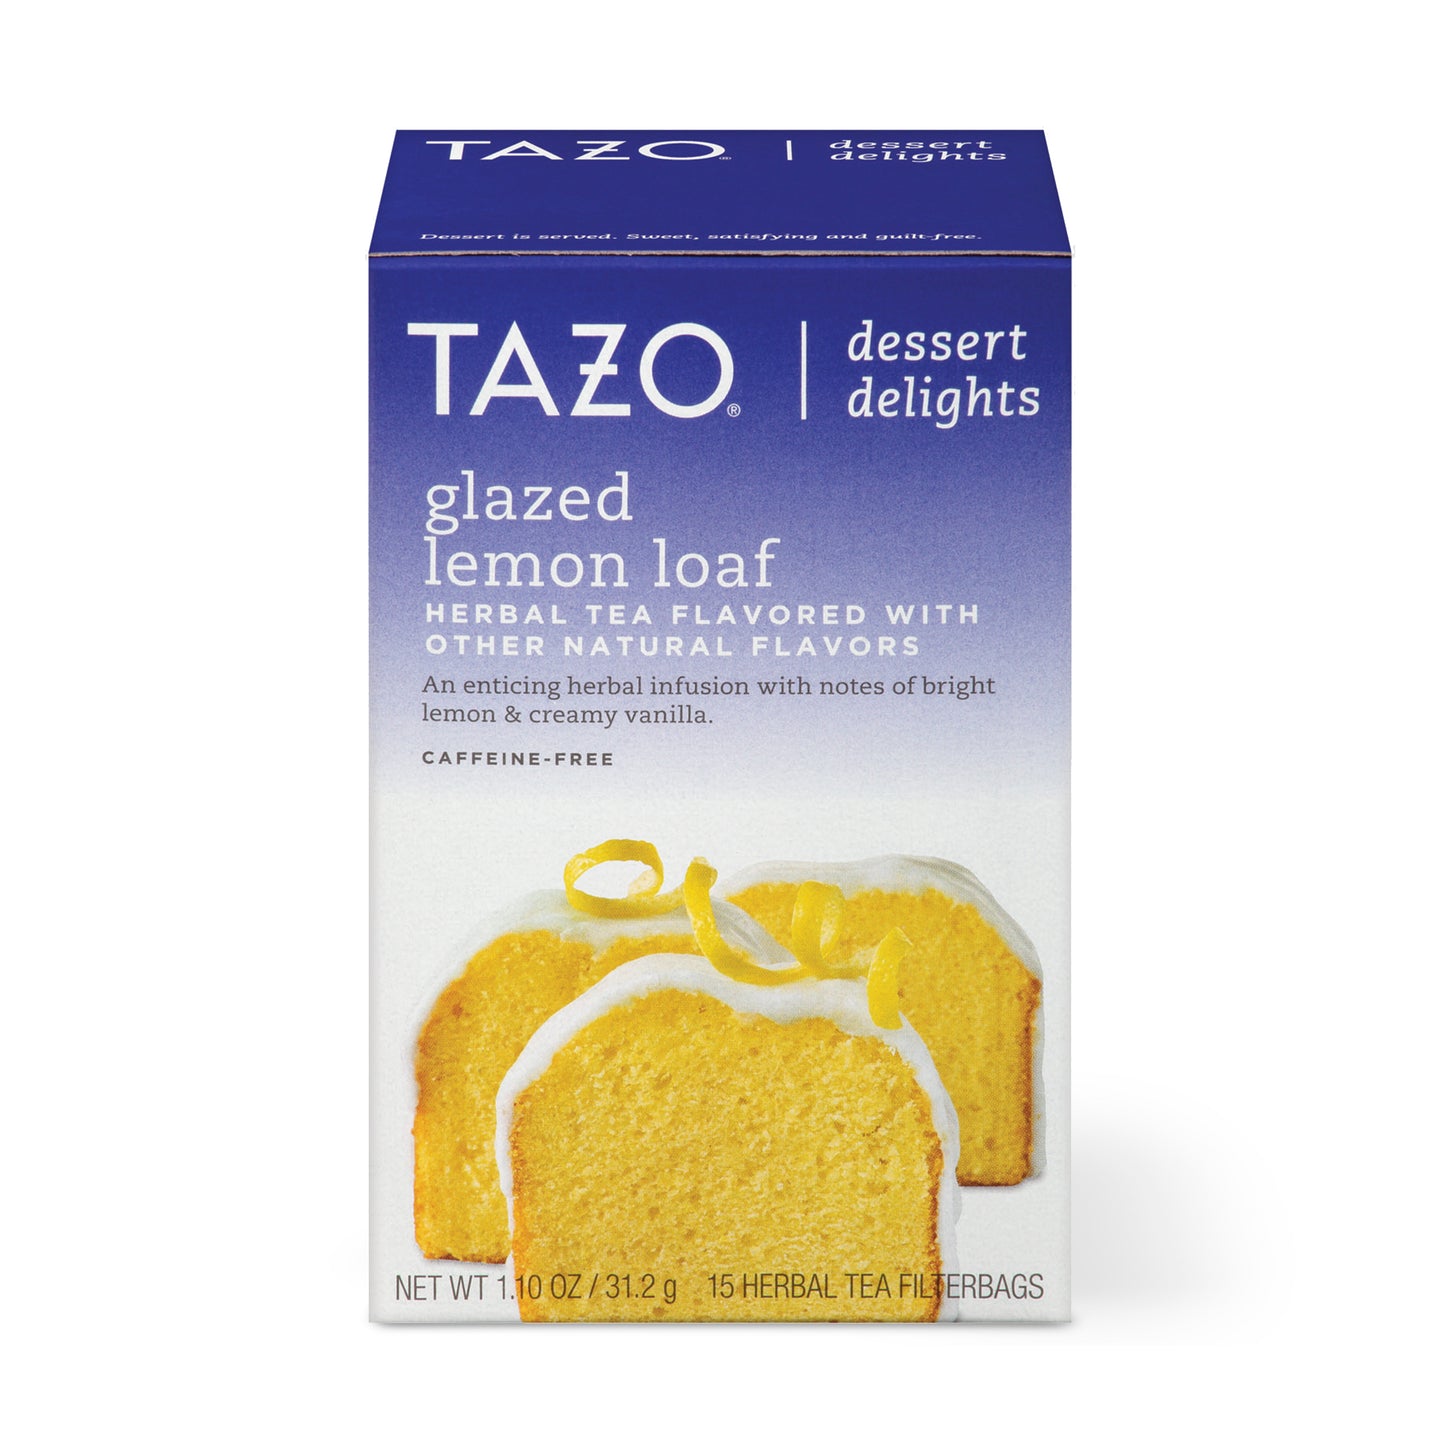 Tazo Glazed Lemon Loaf Tea